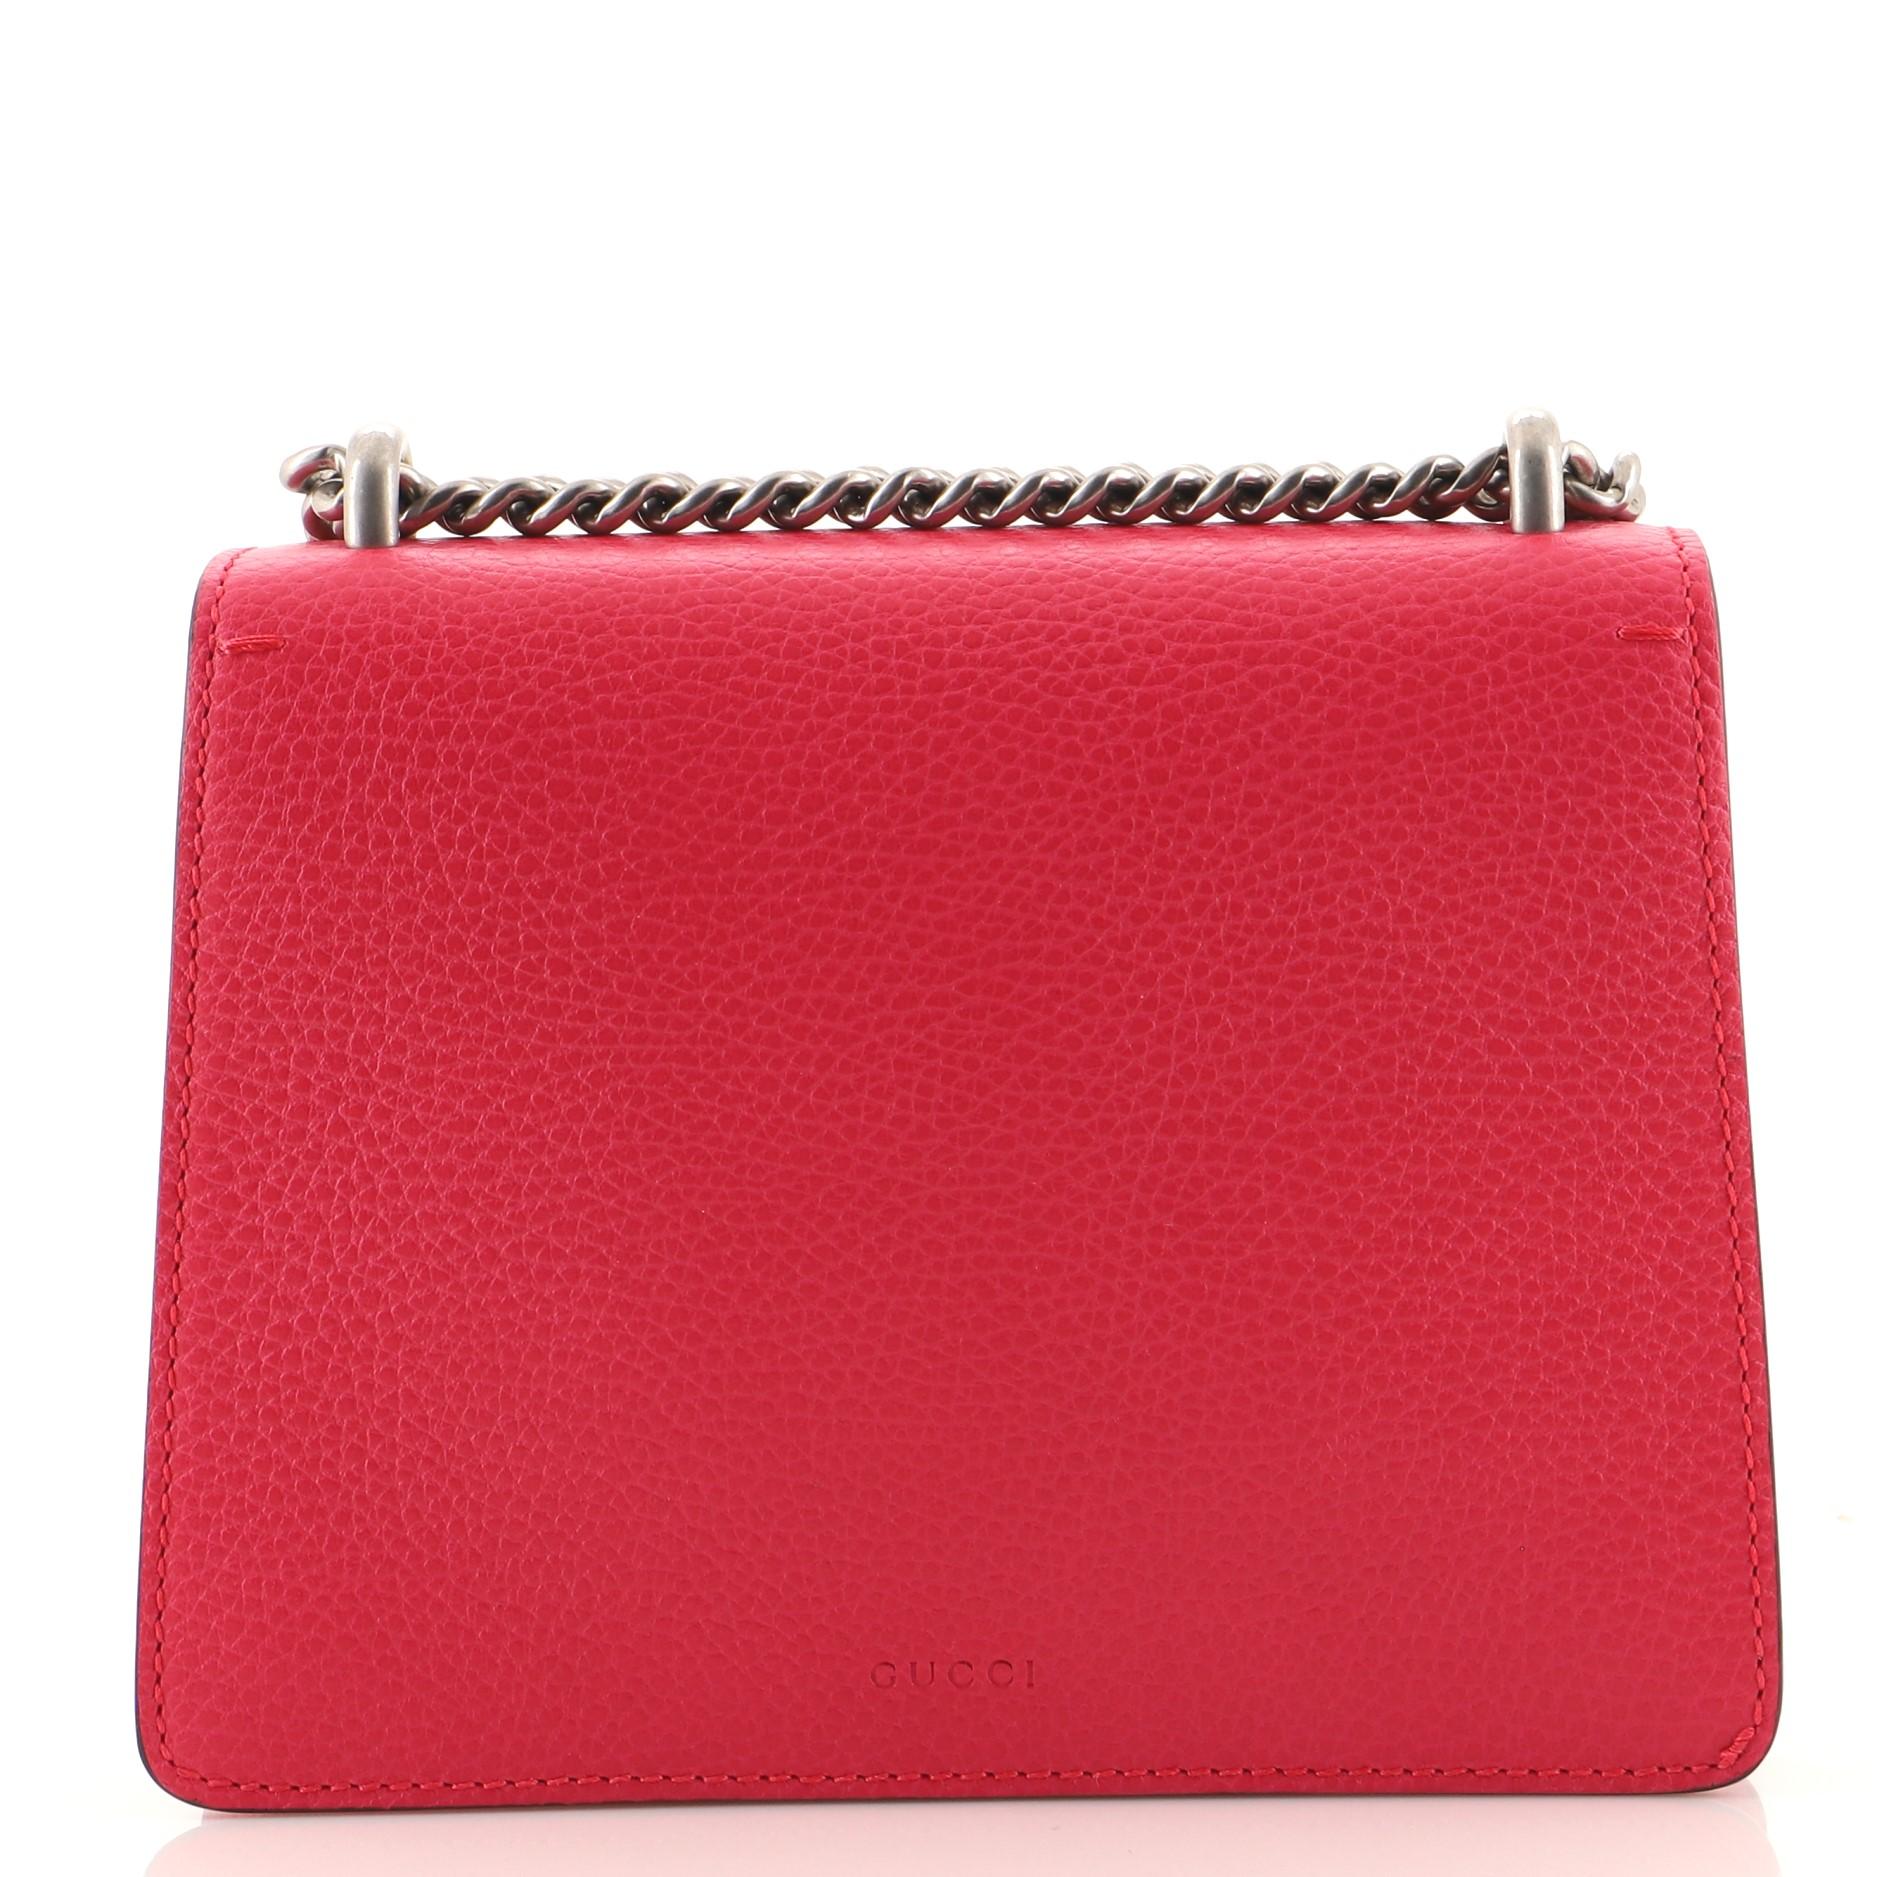 Red Gucci Dionysus Bag Leather Mini